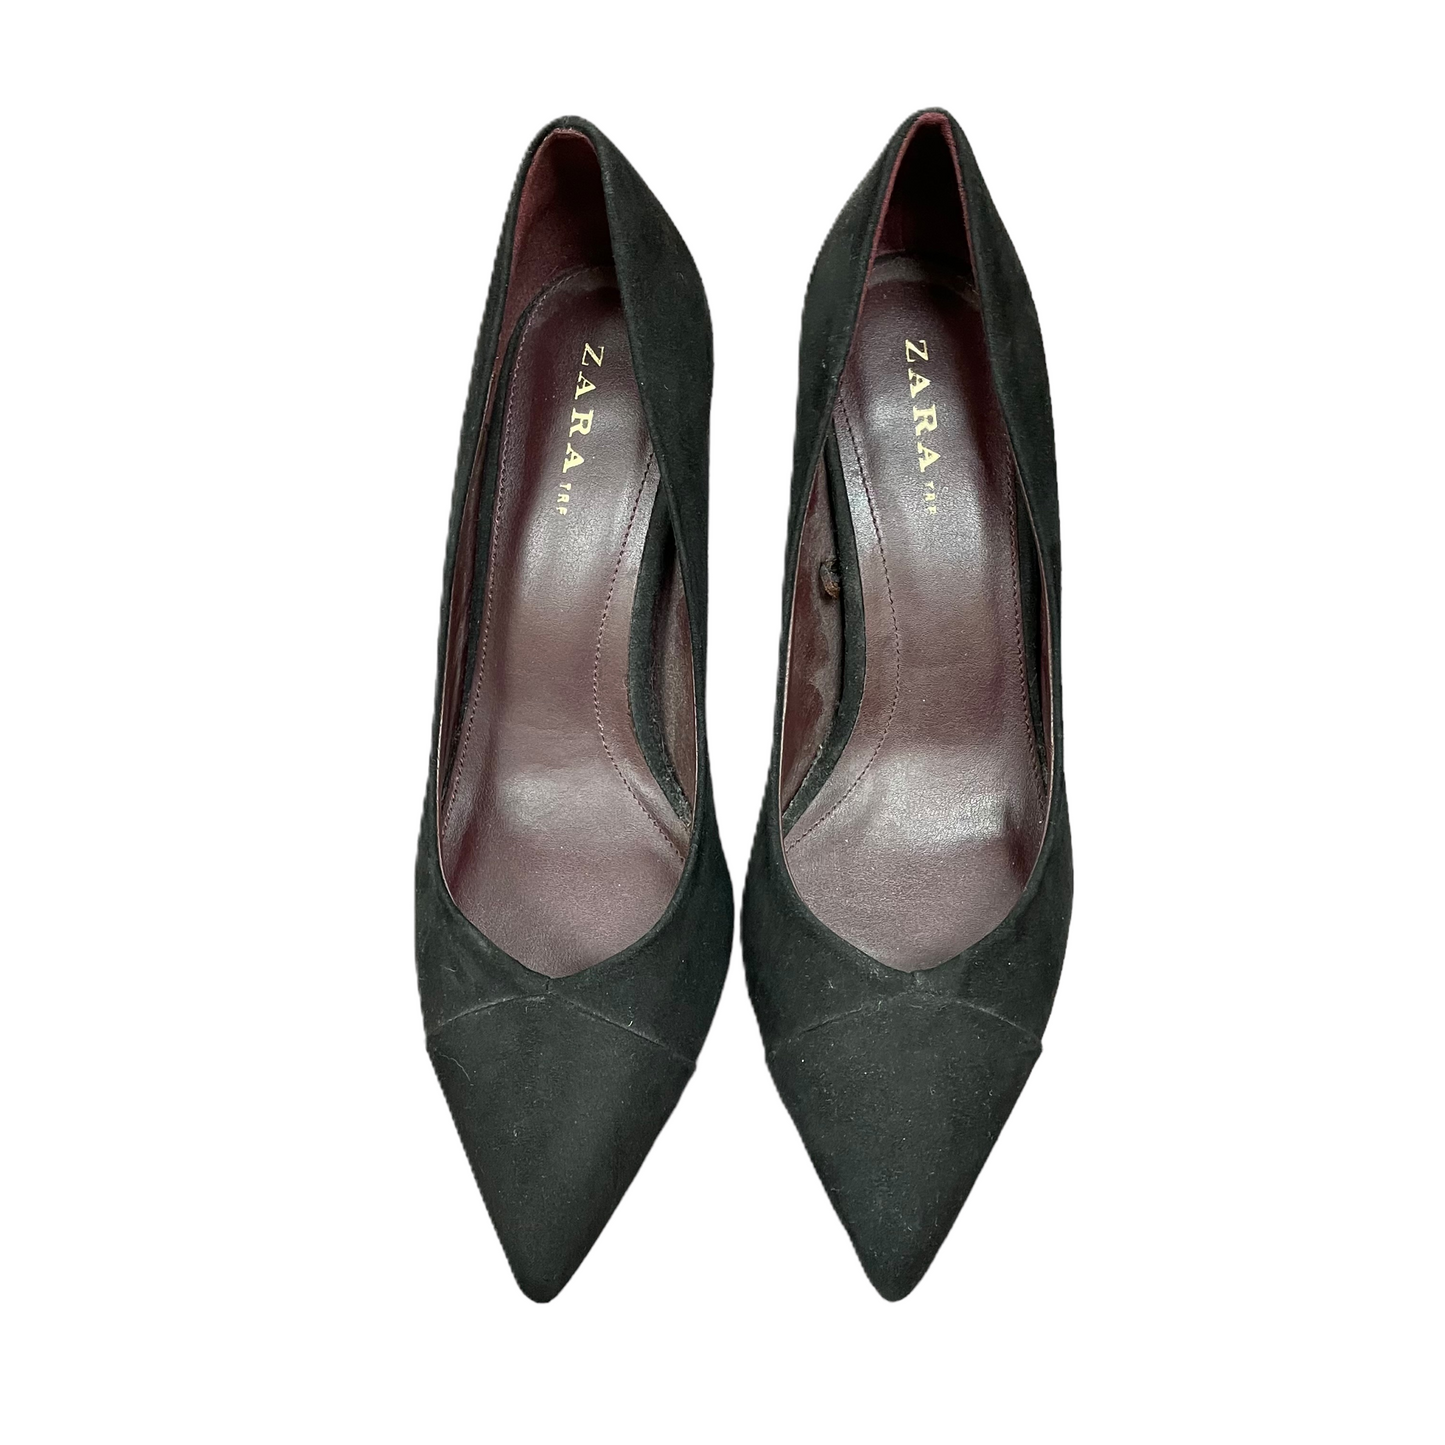 Black Shoes Heels Stiletto By Zara, Size: 11